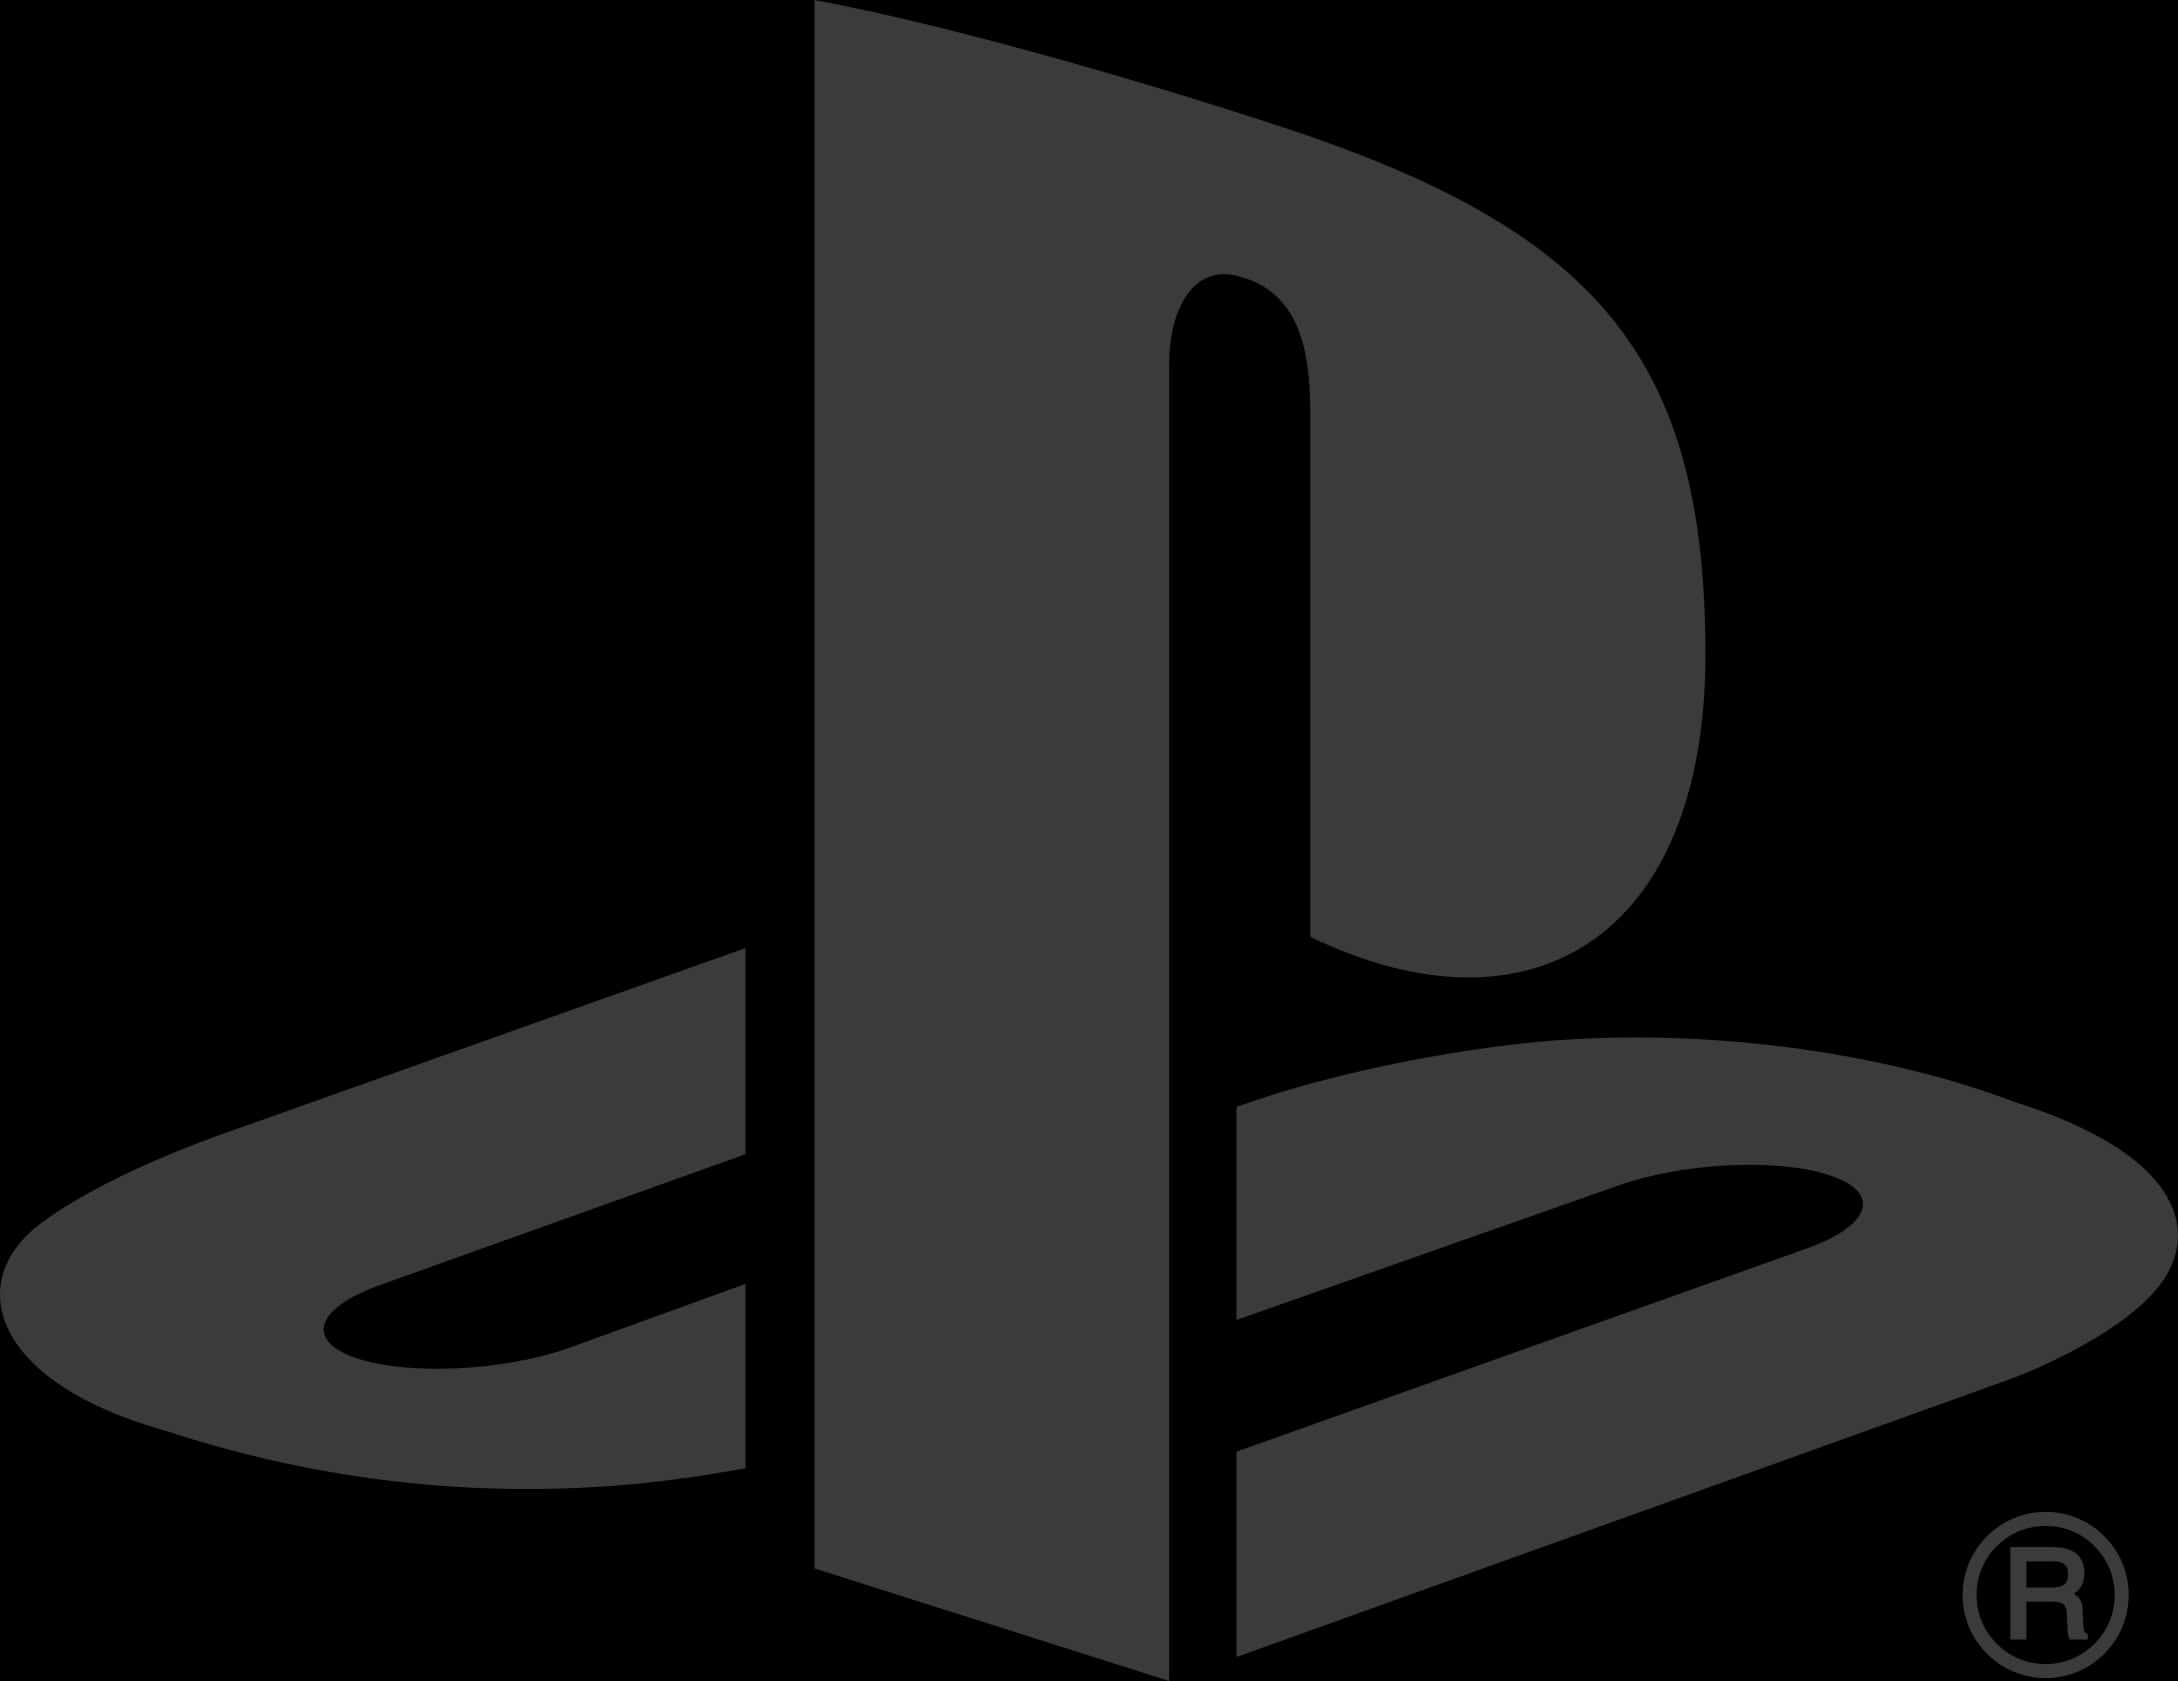 Play Station Logo Black Background PNG image